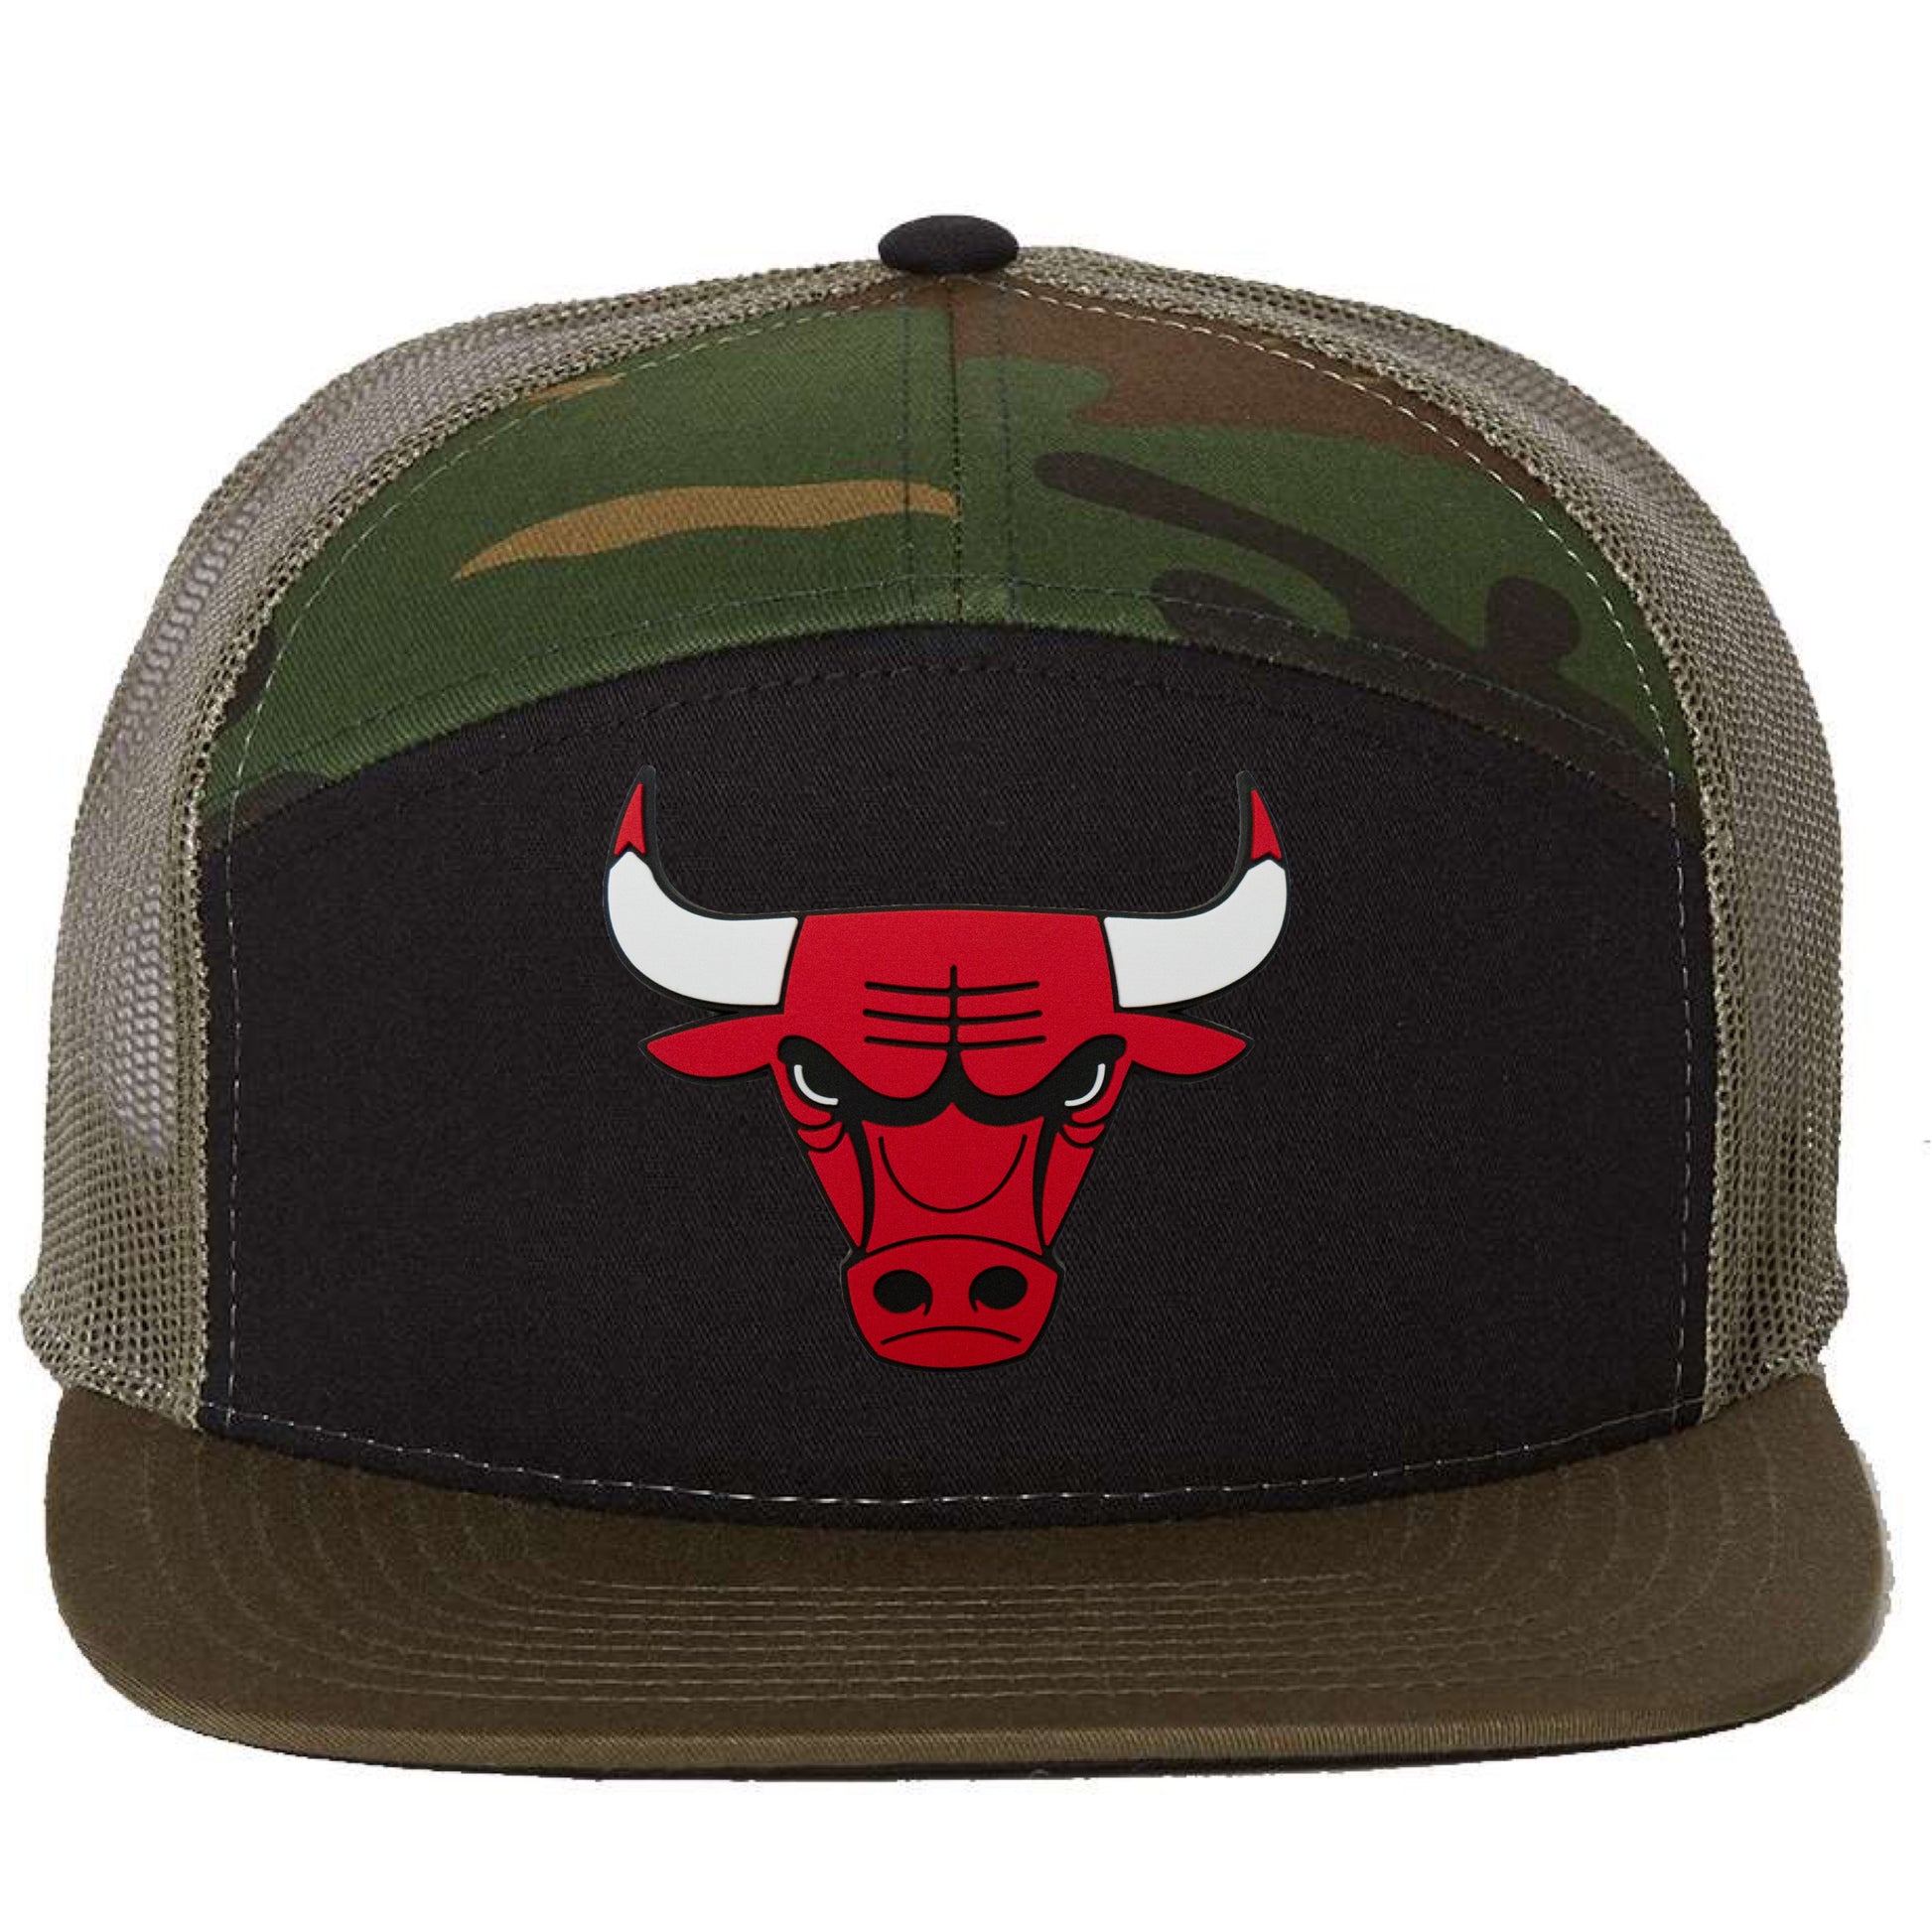 Chicago Bulls 3D Snapback Seven-Panel Trucker Hat- Black/ Camo/ Loden - Ten Gallon Hat Co.